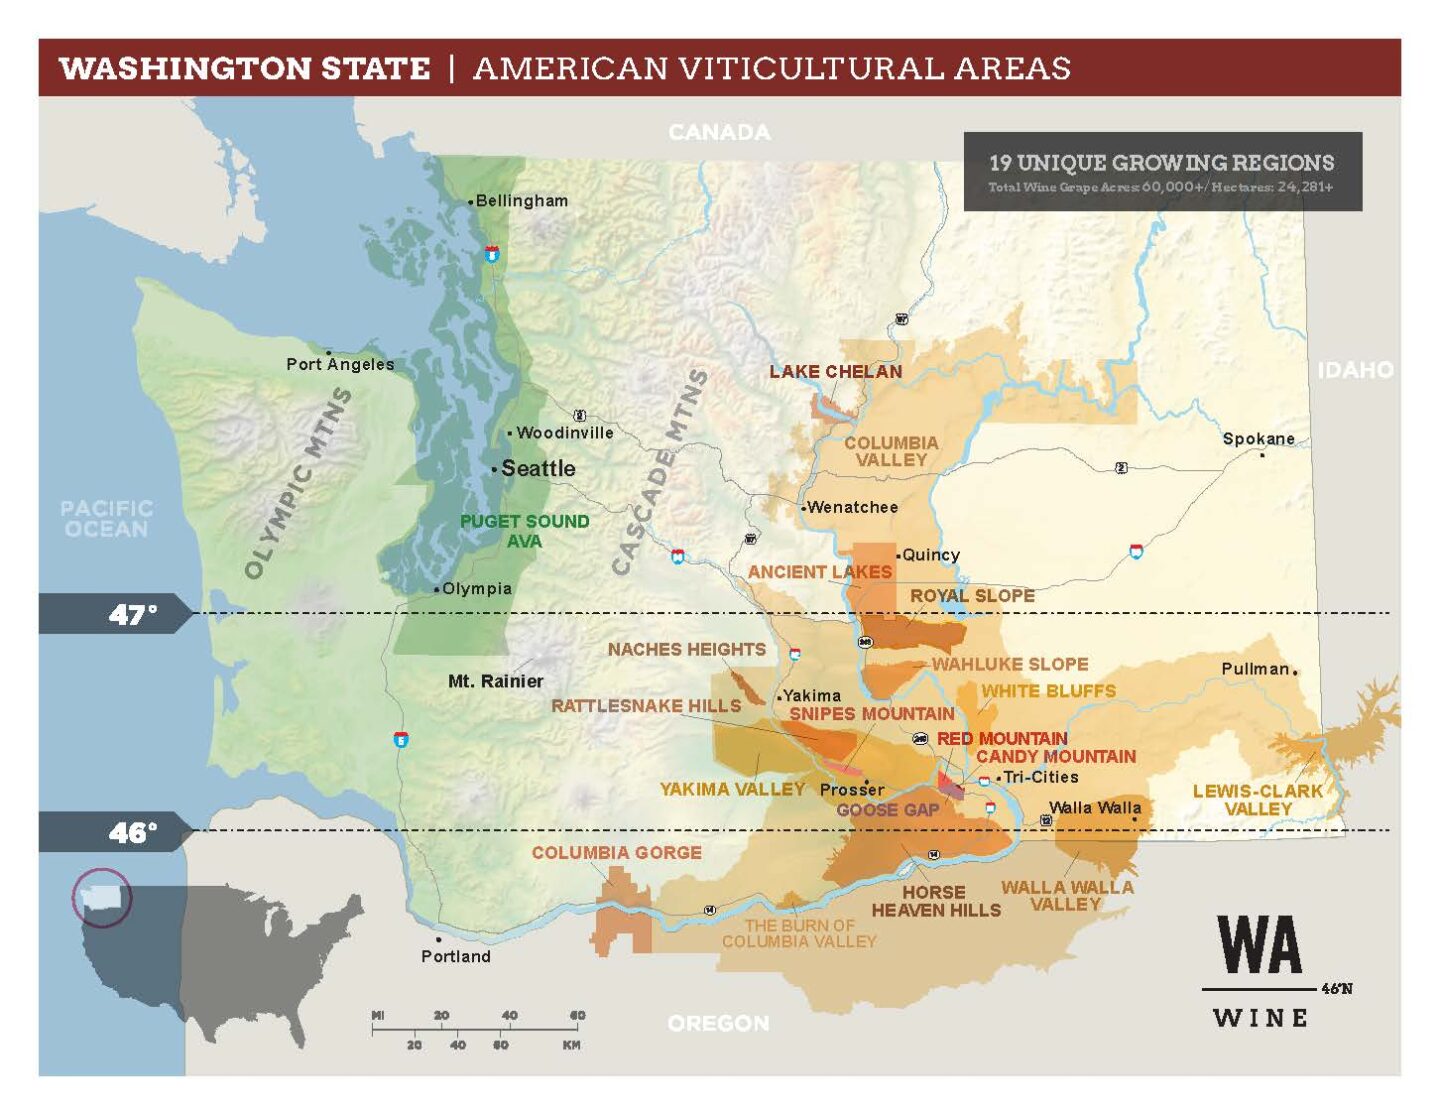 Washington Wine AVA Map, including Walla Walla